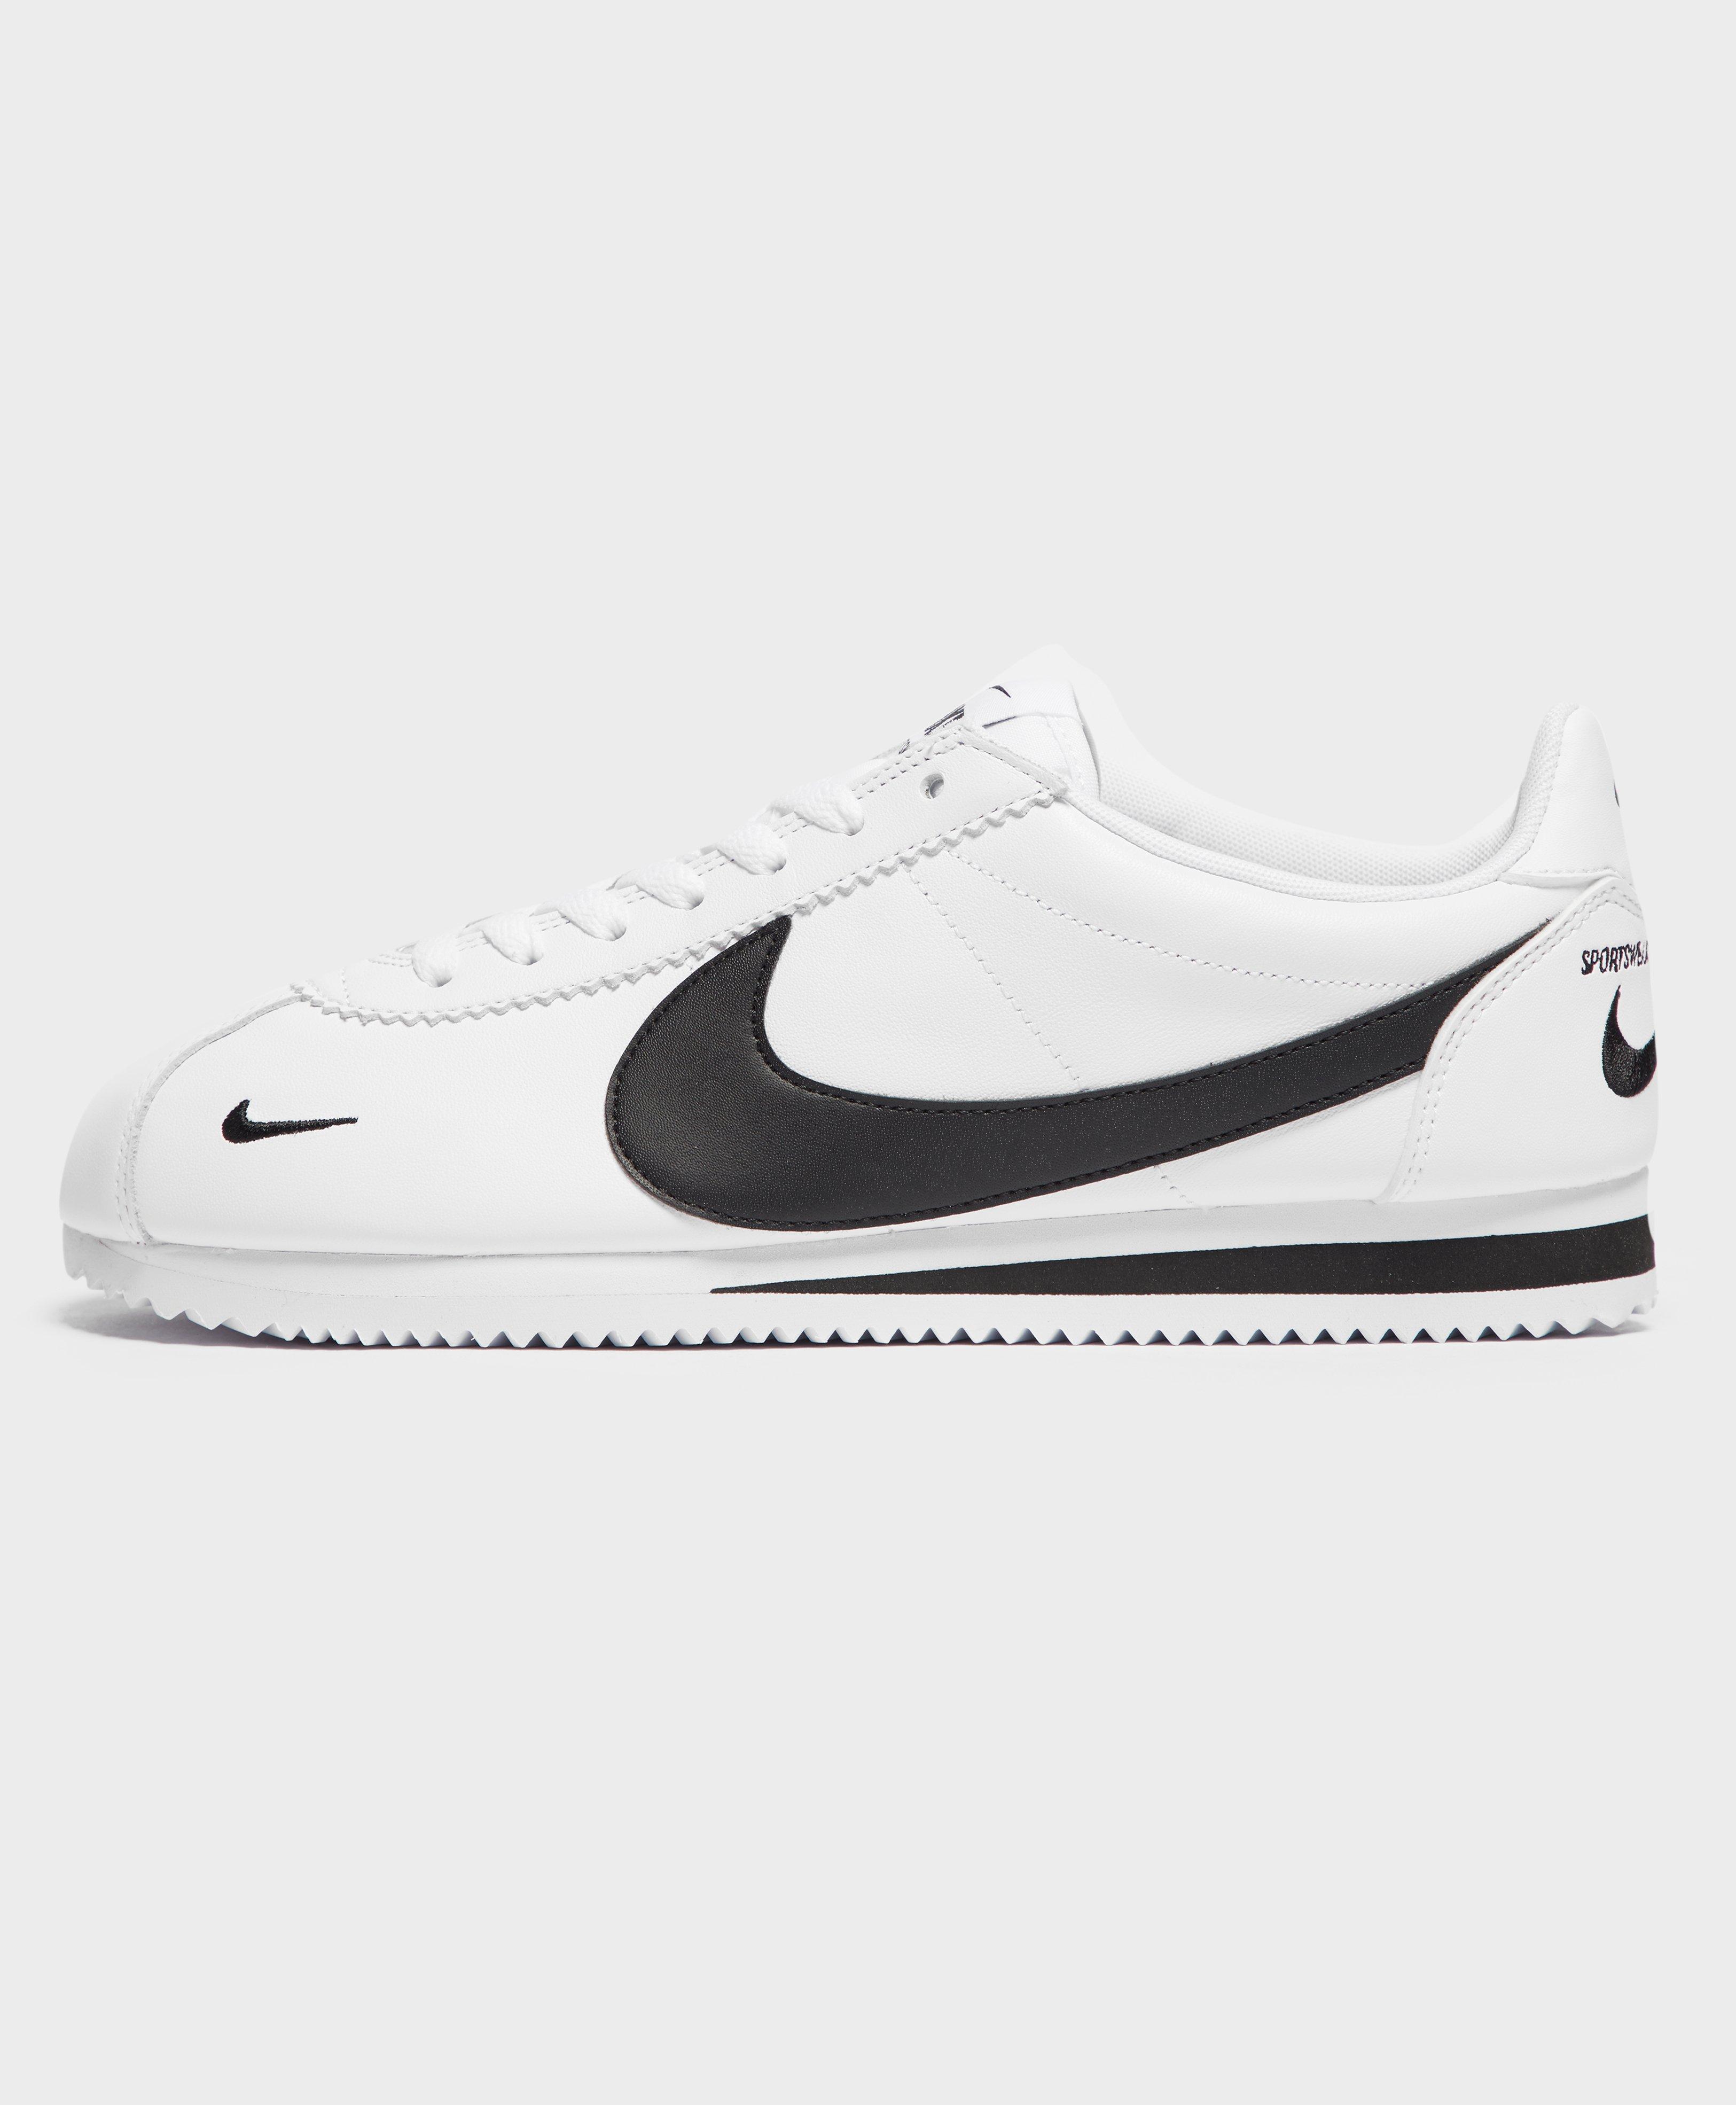 Nike Cortez Basic Leather Og Shoe in White/Black (White) - Save 60% | Lyst